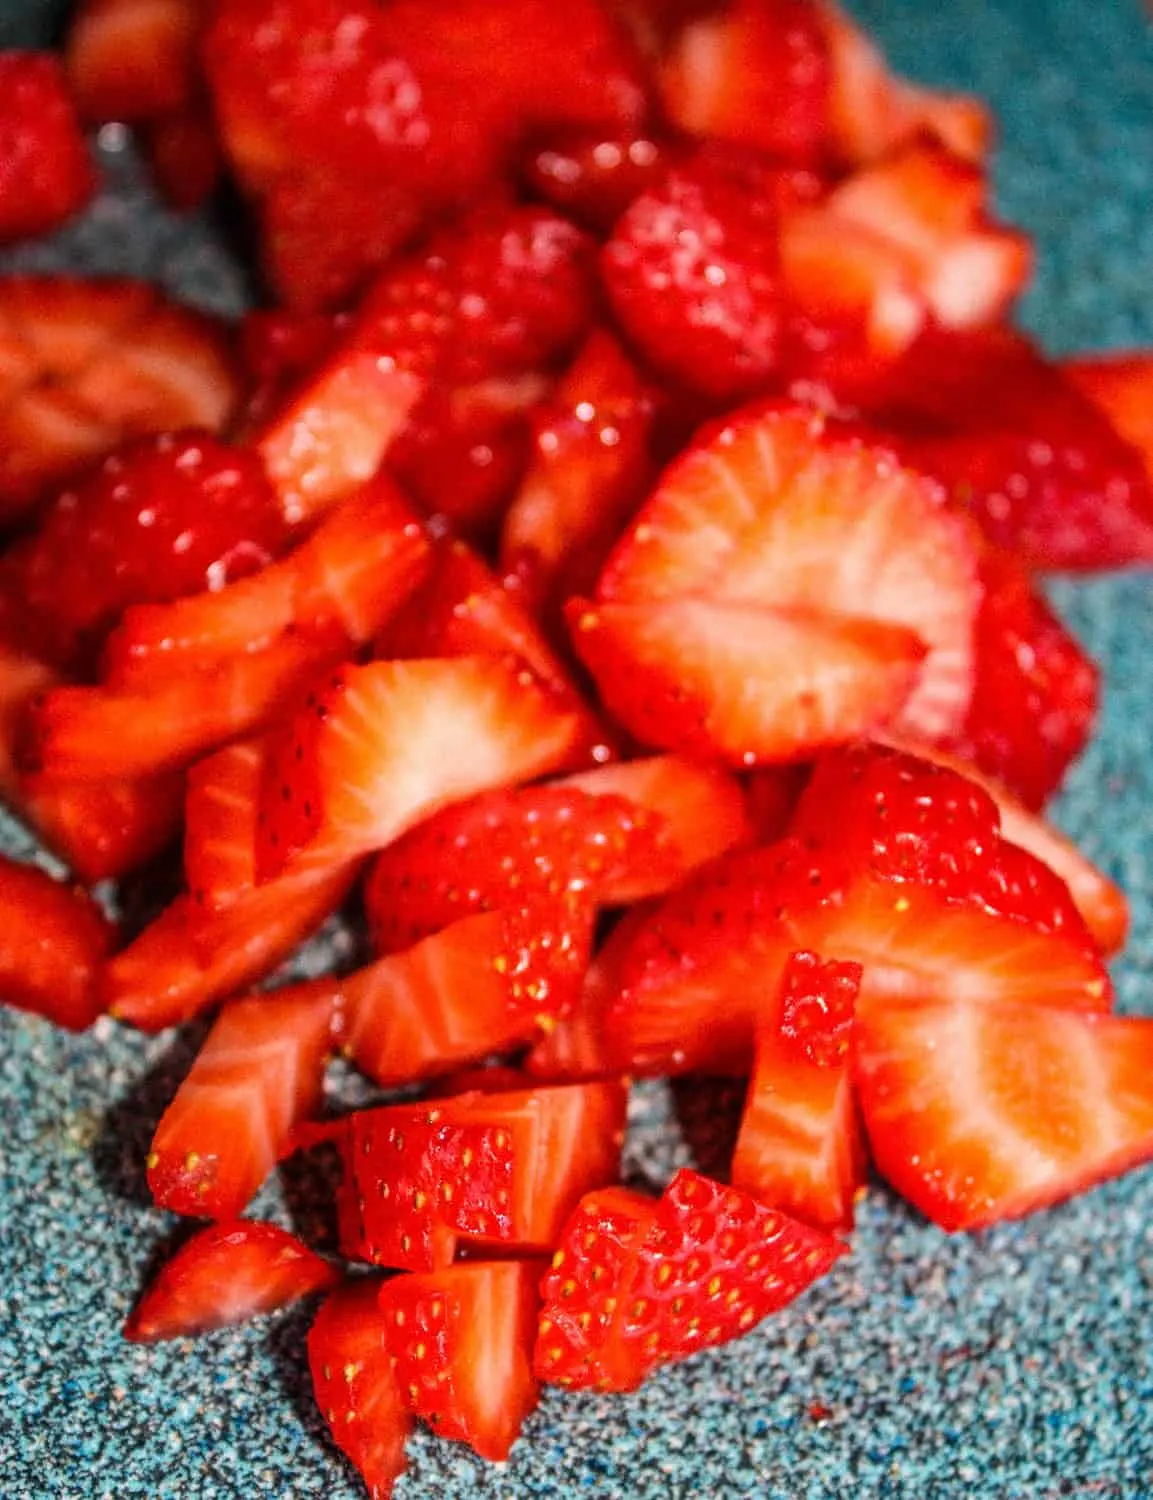 The cut strawberries.